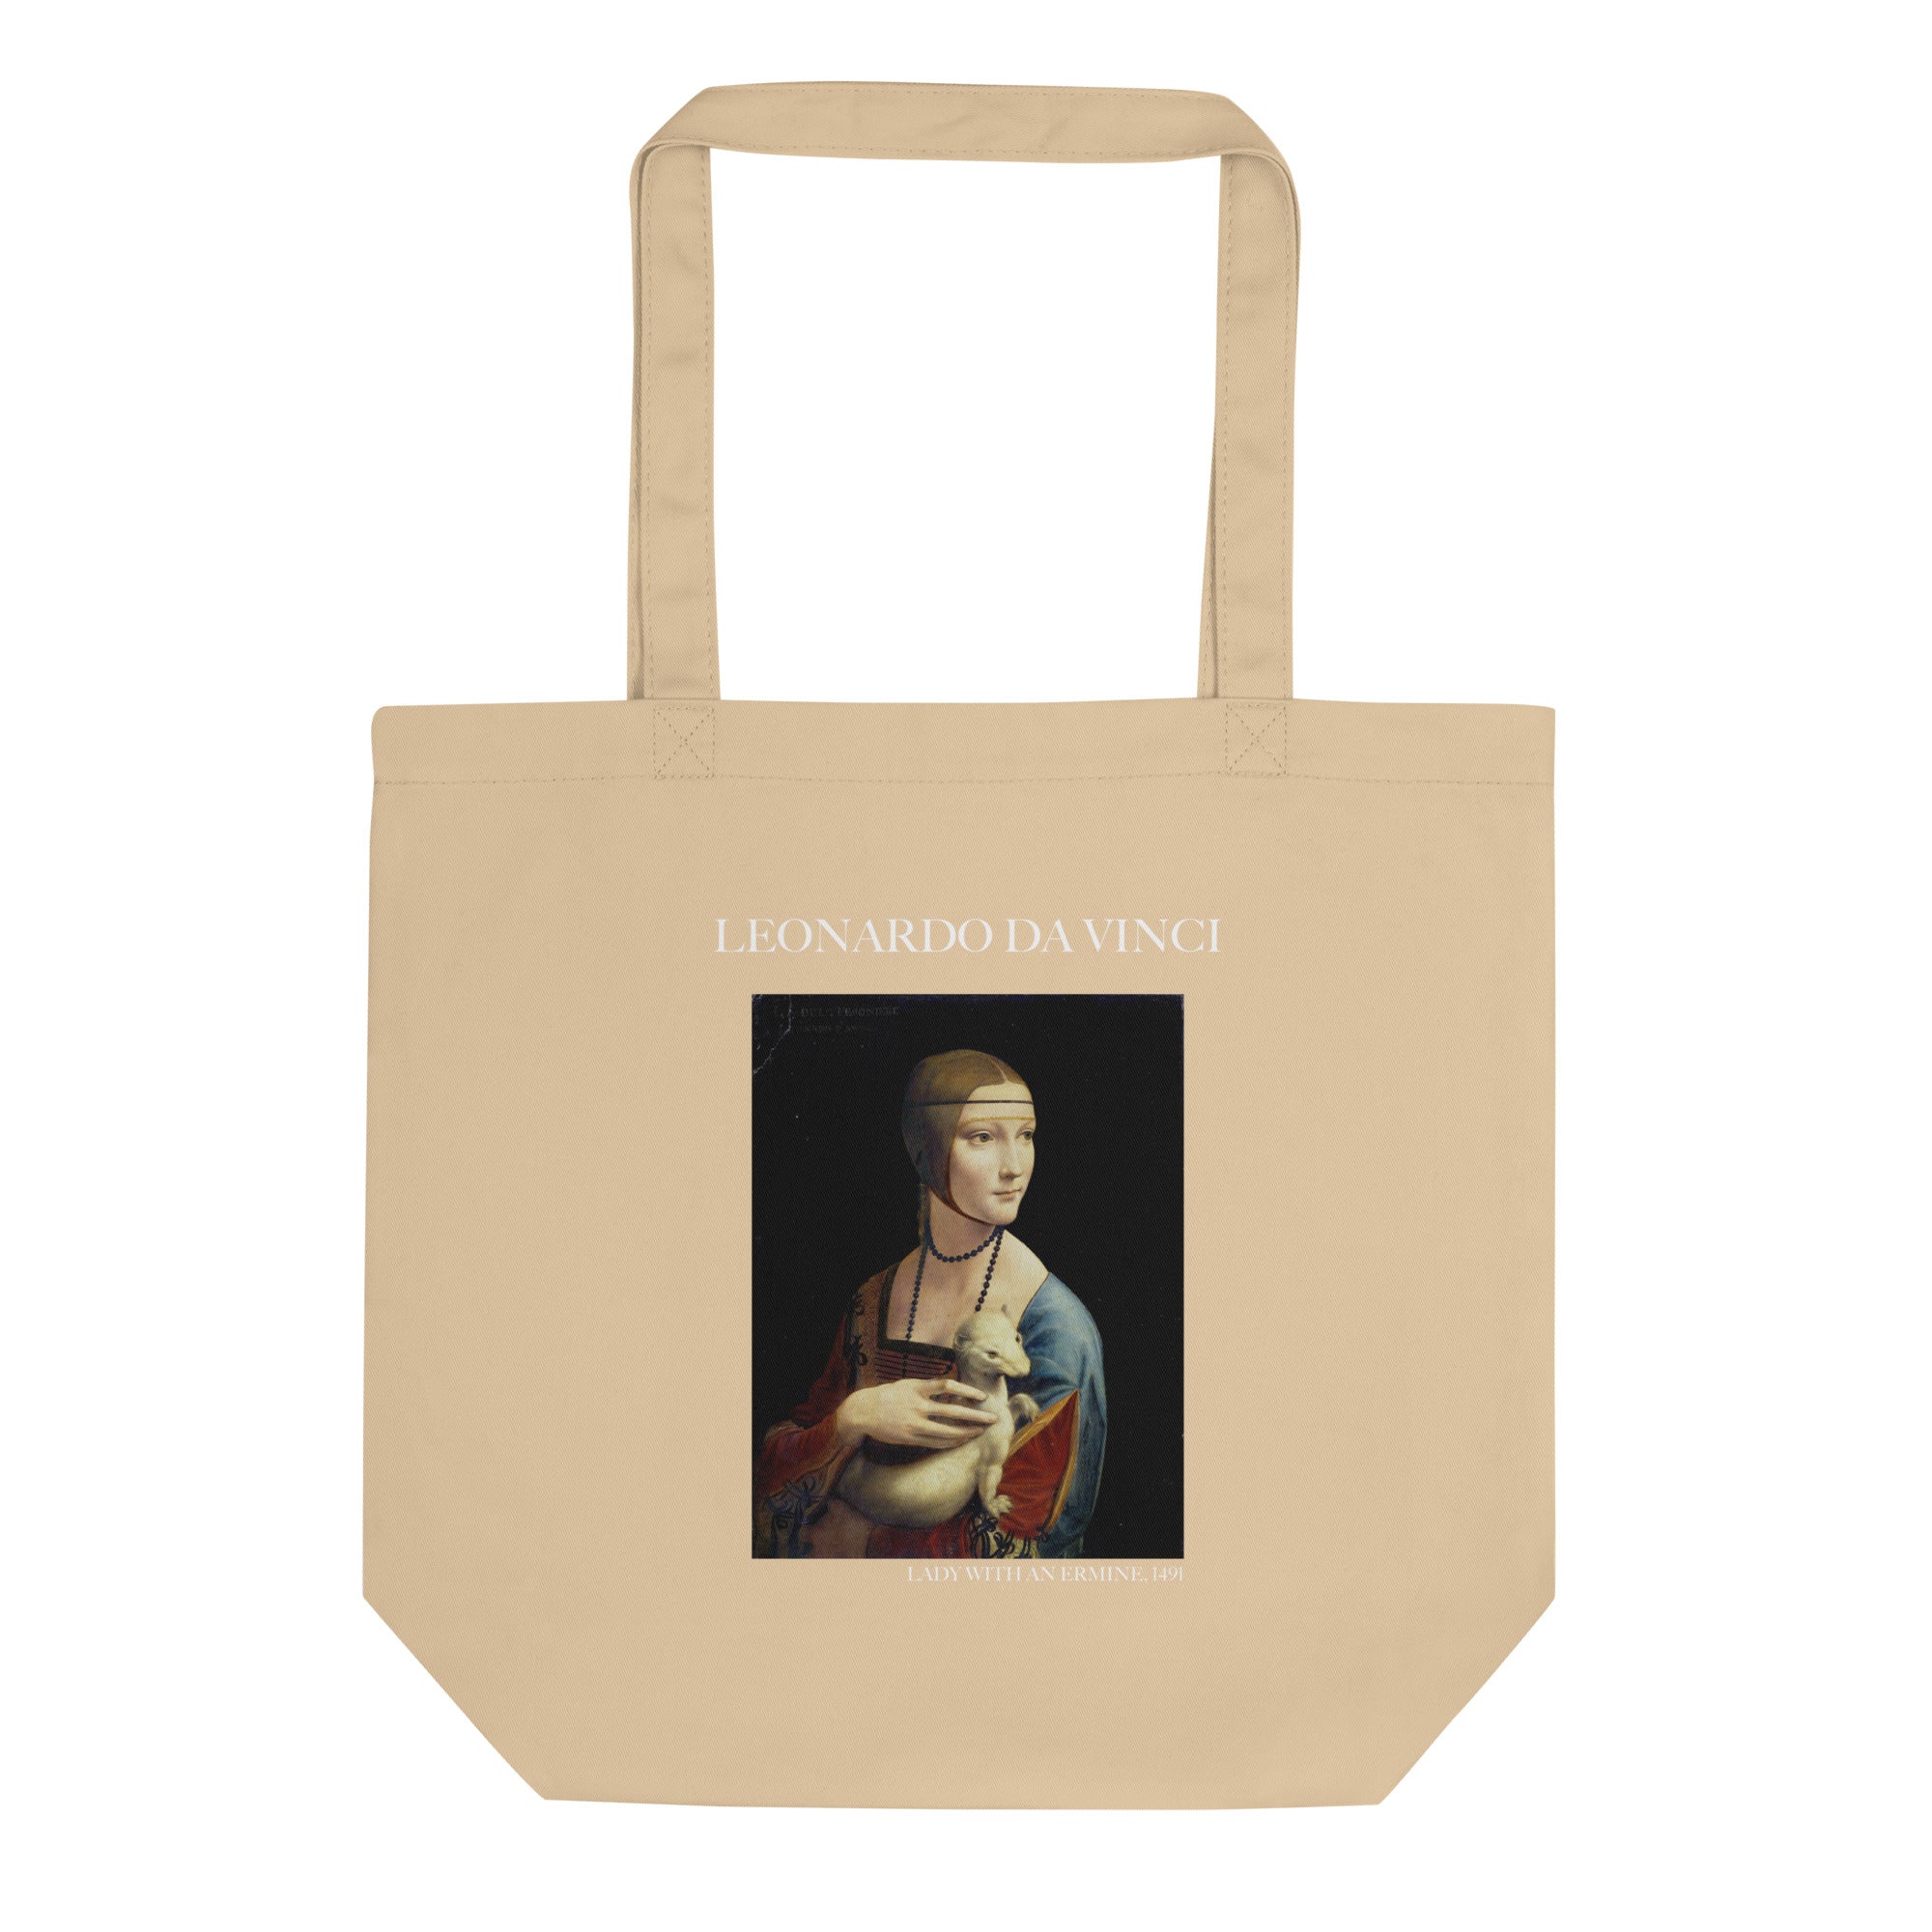 Leonardo da Vinci 'Lady with an Ermine' Famous Painting Totebag | Eco Friendly Art Tote Bag